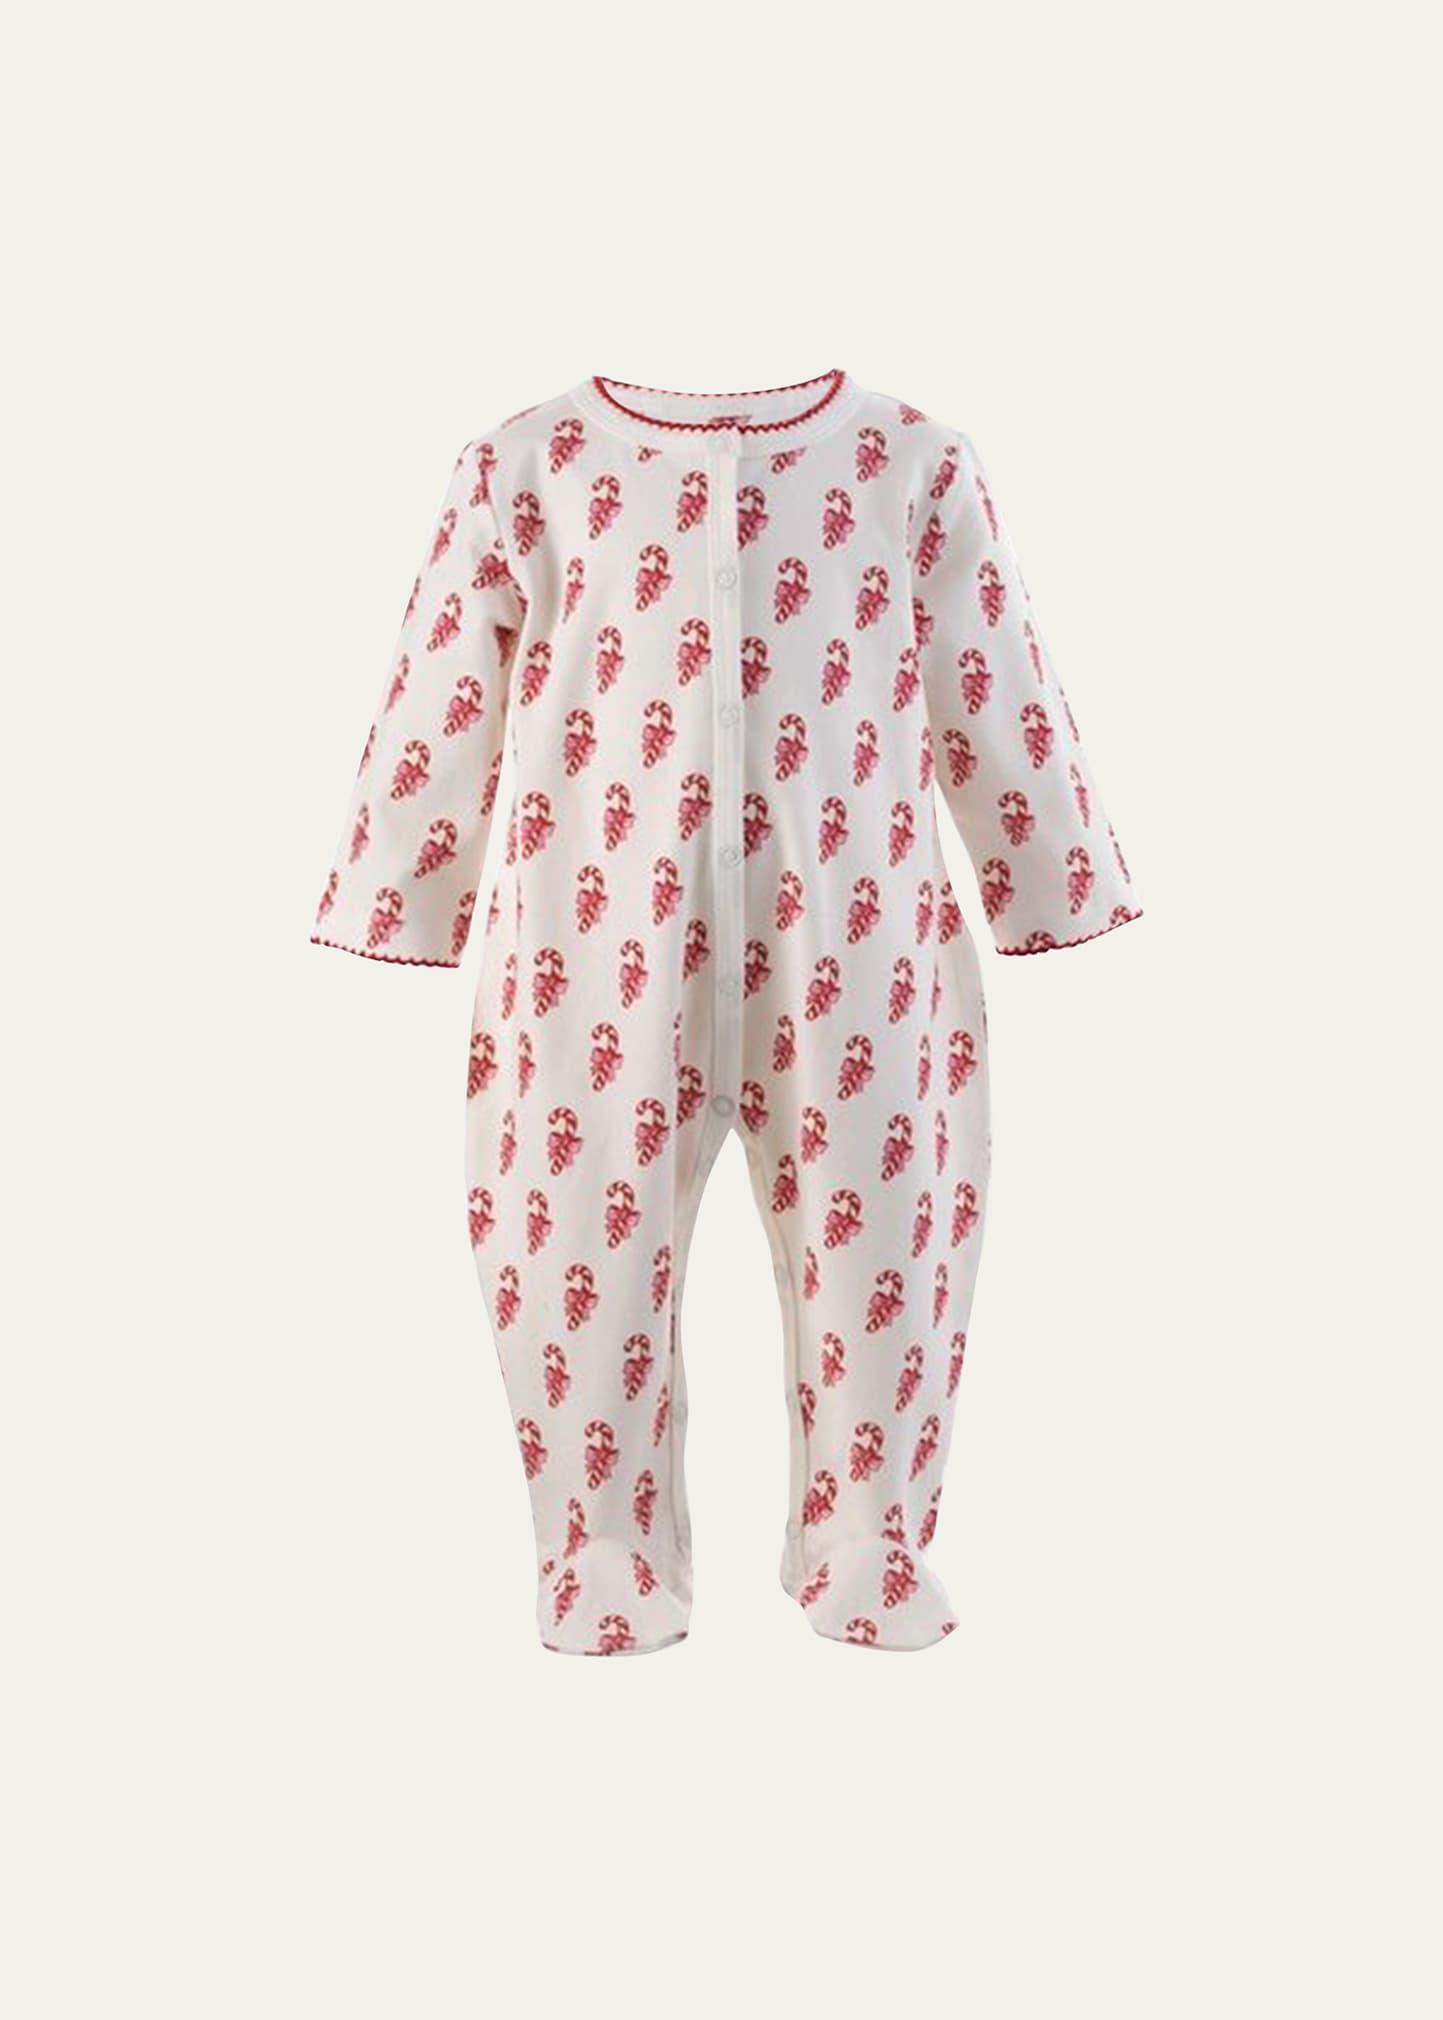 Girl's Candy Cane BabyGro Footie Pajamas, Size 1M-12M